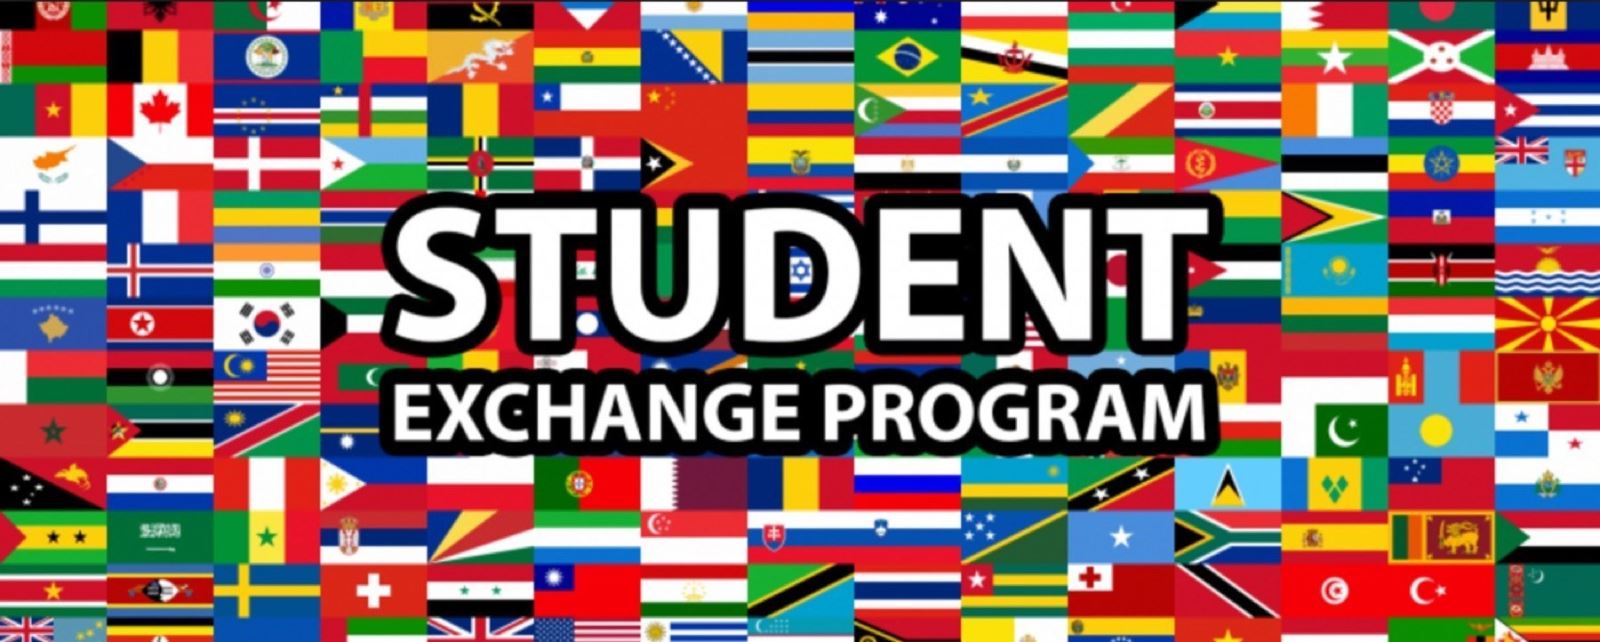 exchange programs for Pakistani students 2019  2020